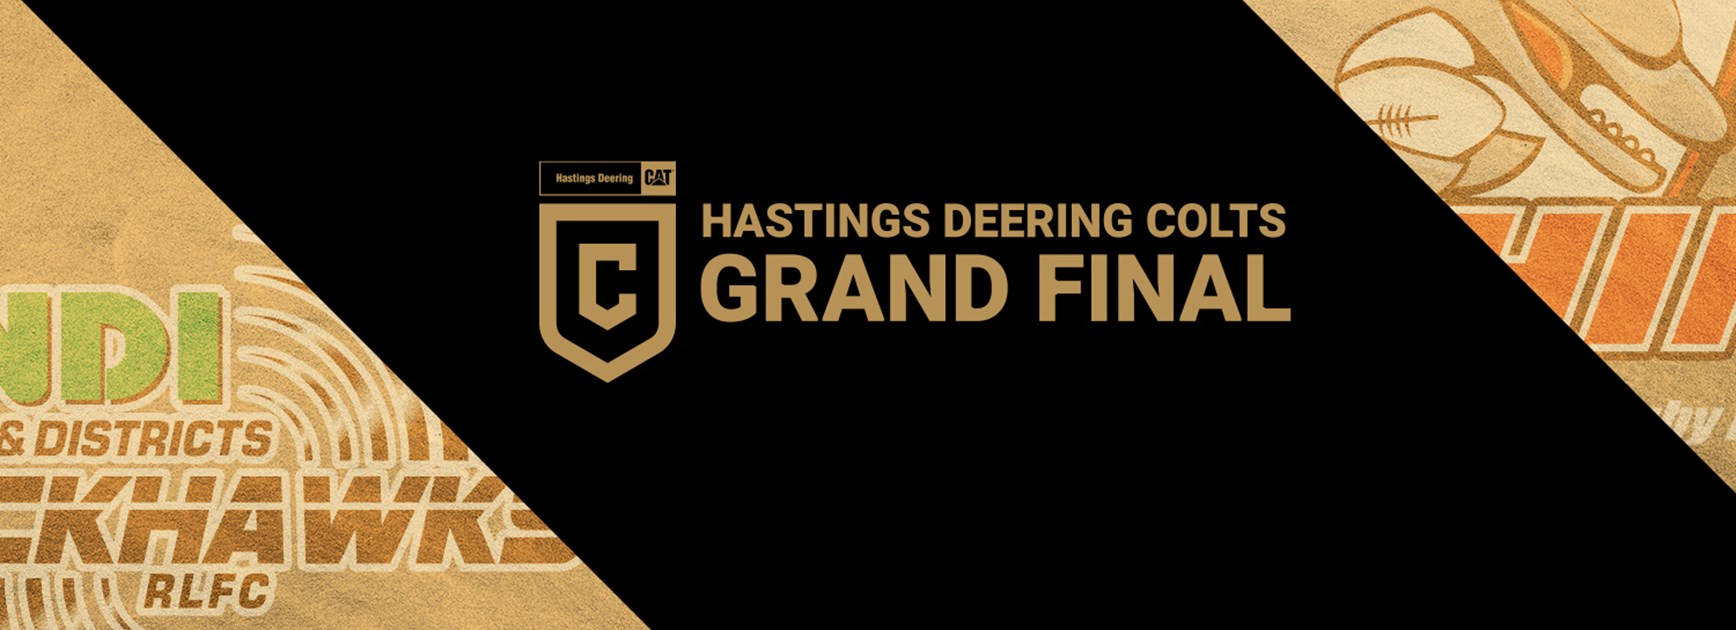 Hastings Deering Colts grand final team lists